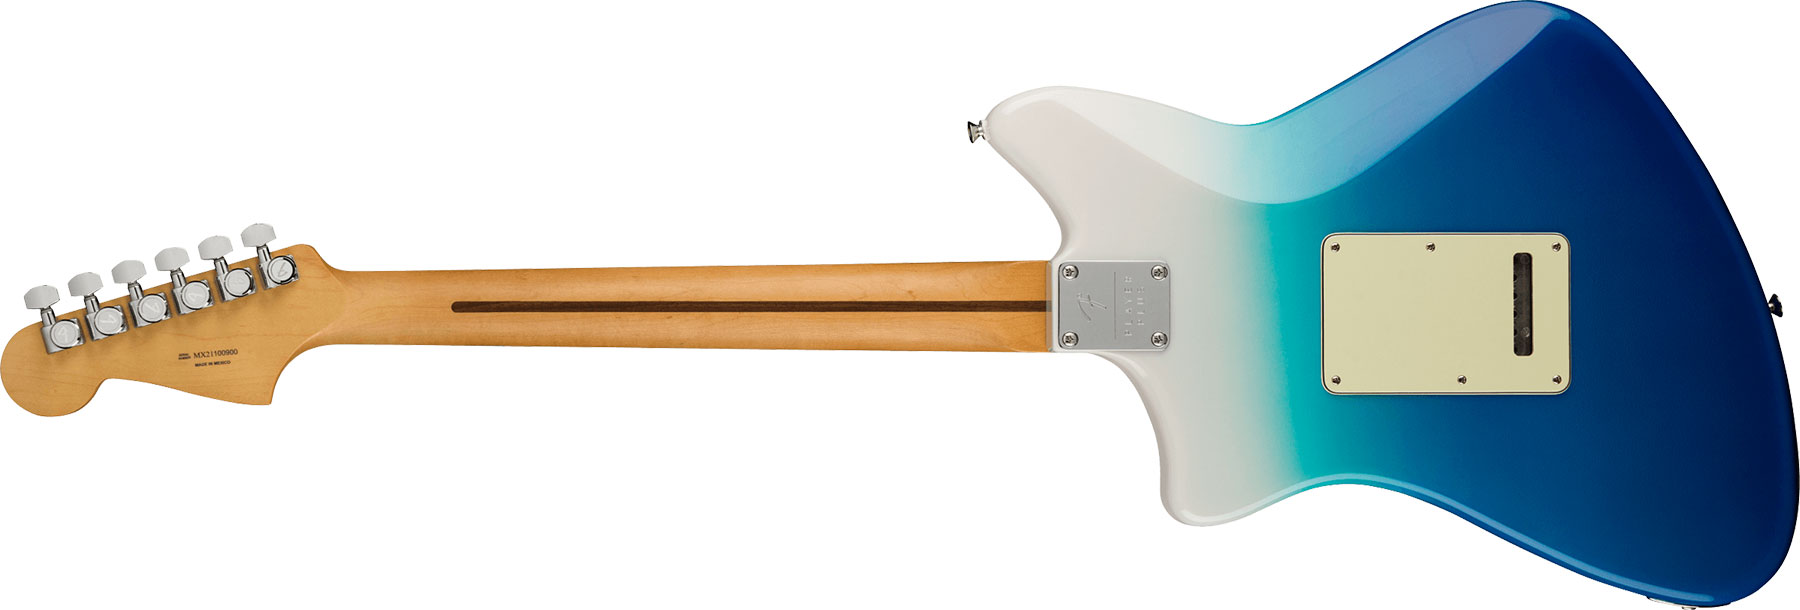 Fender Meteora Player Plus Hh Mex 2h Ht Pf - Belair Blue - Retro rock electric guitar - Variation 1